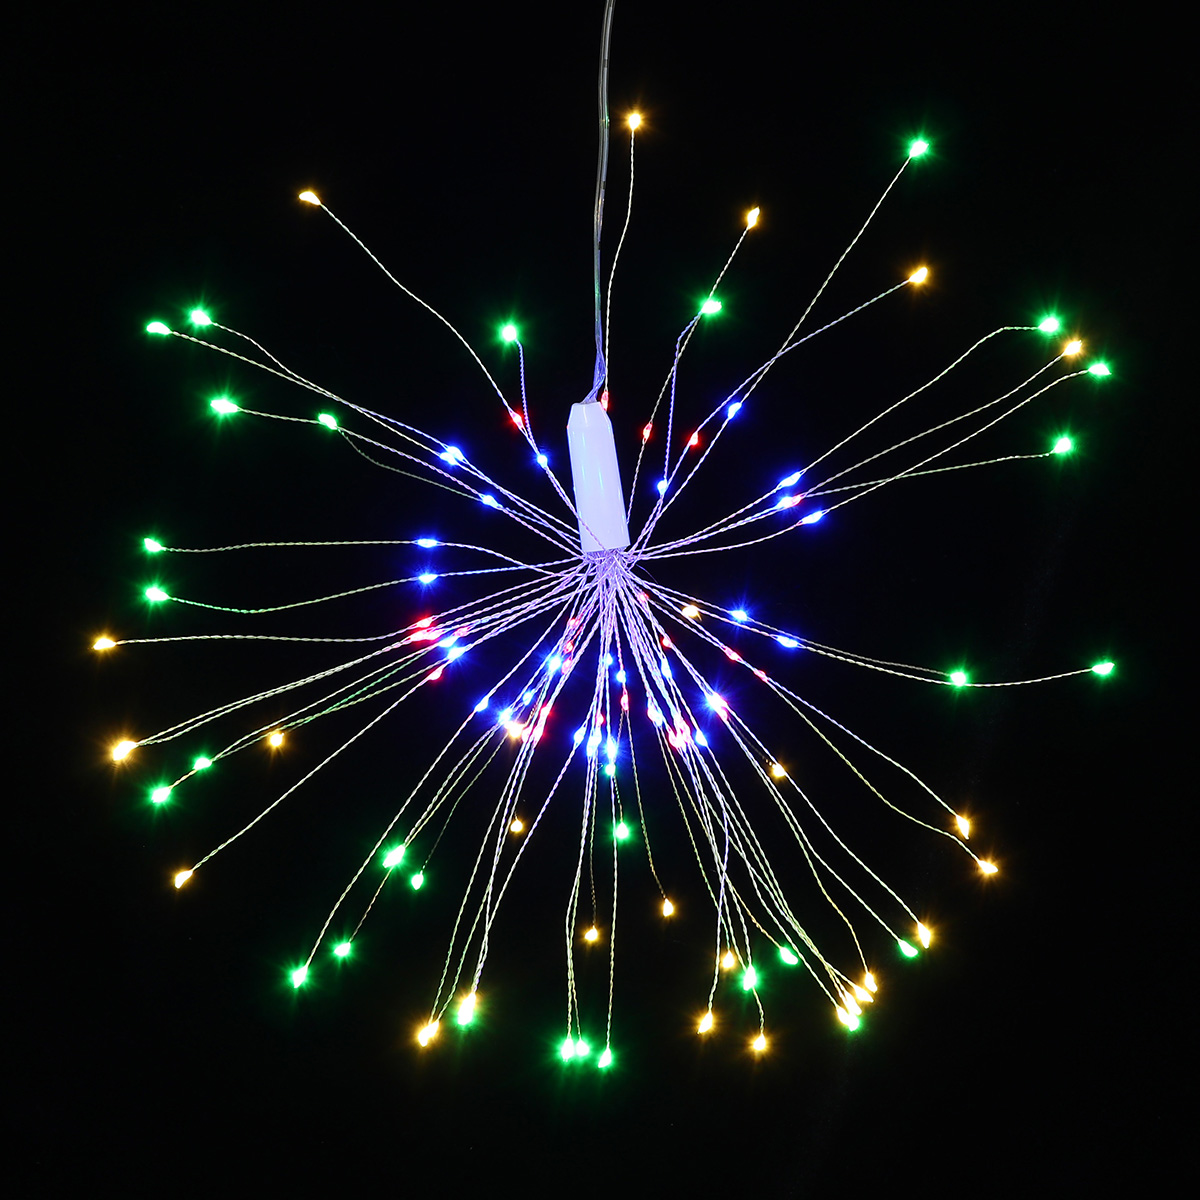 USB-120150180-LED-Hanging-Firework-Fairy-String-Light-Party-Home-Wedding-Decor-1689452-2